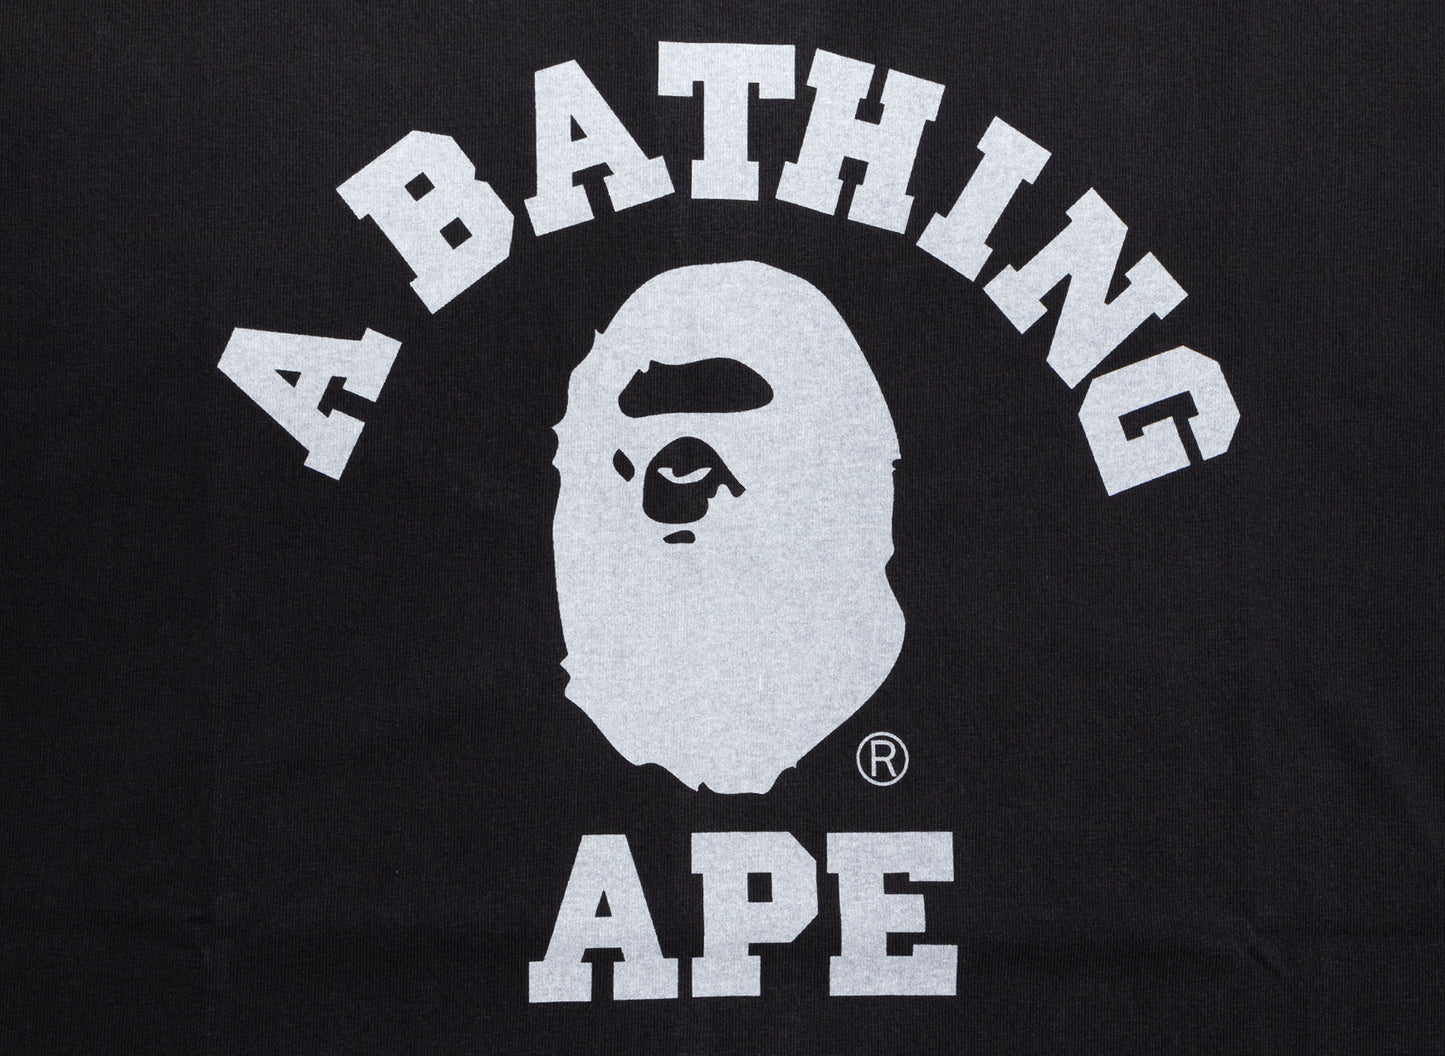 A Bathing Ape College Overdye Tee in Black